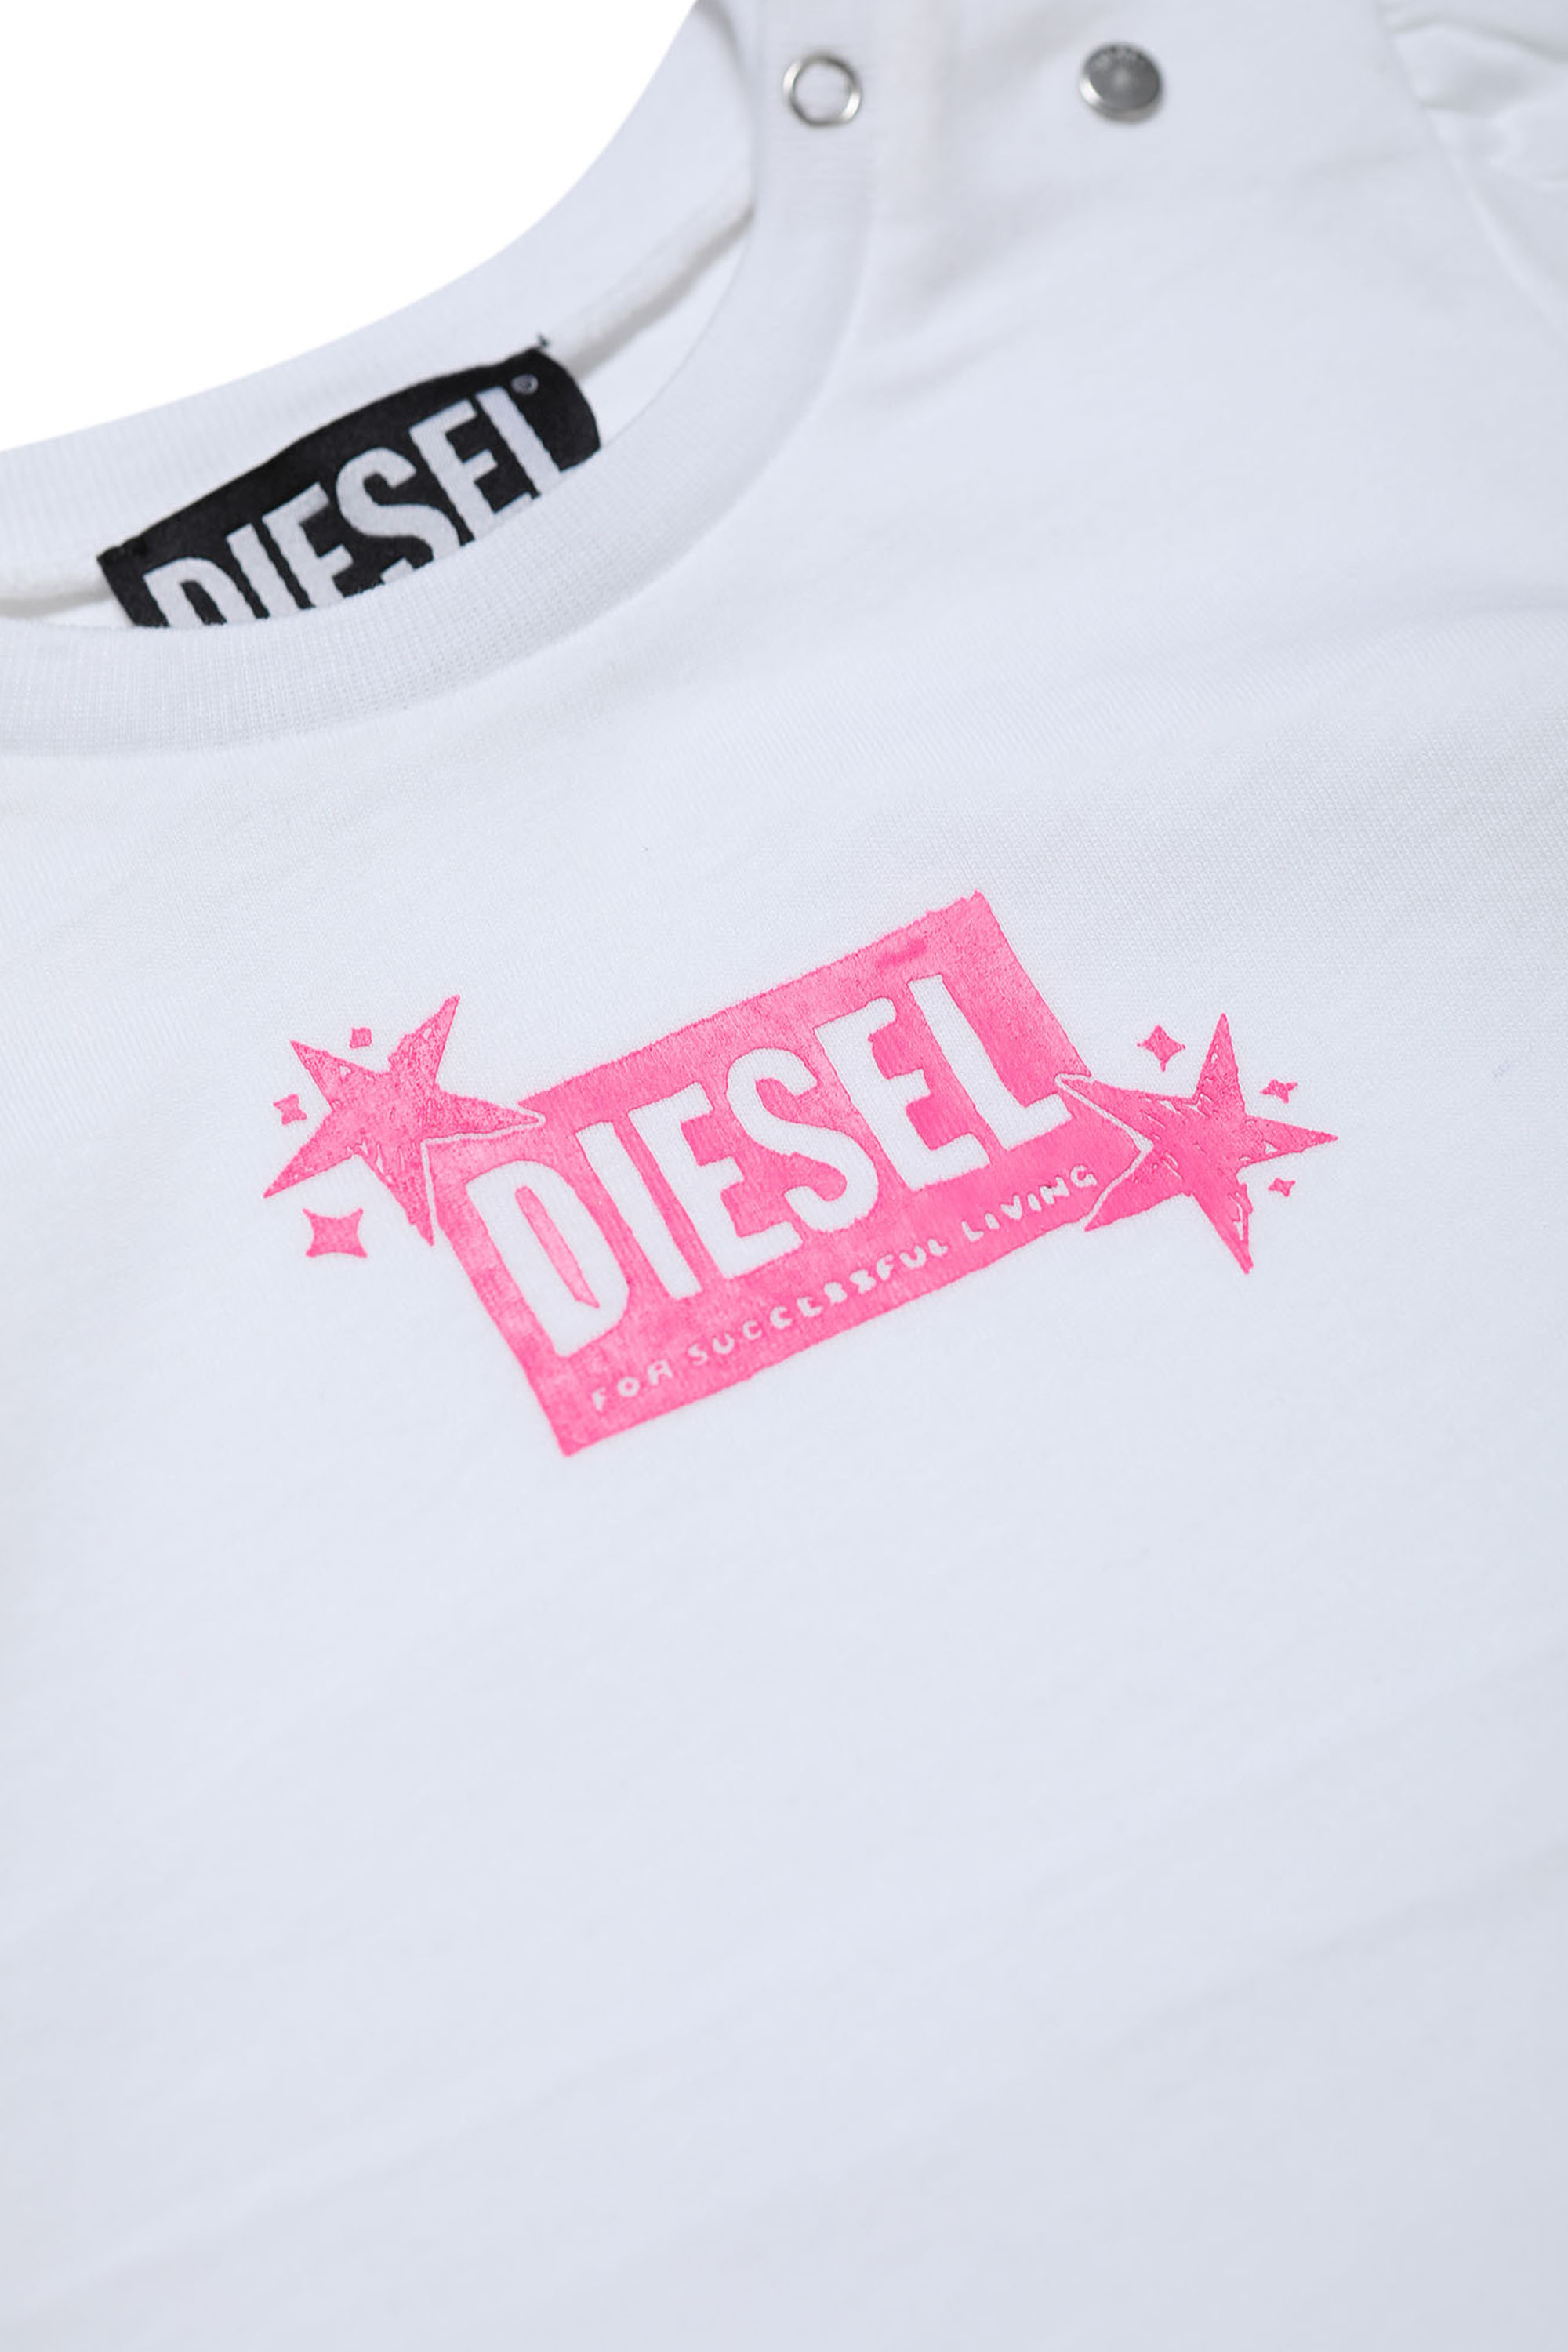 Diesel - TRENB, White - Image 3